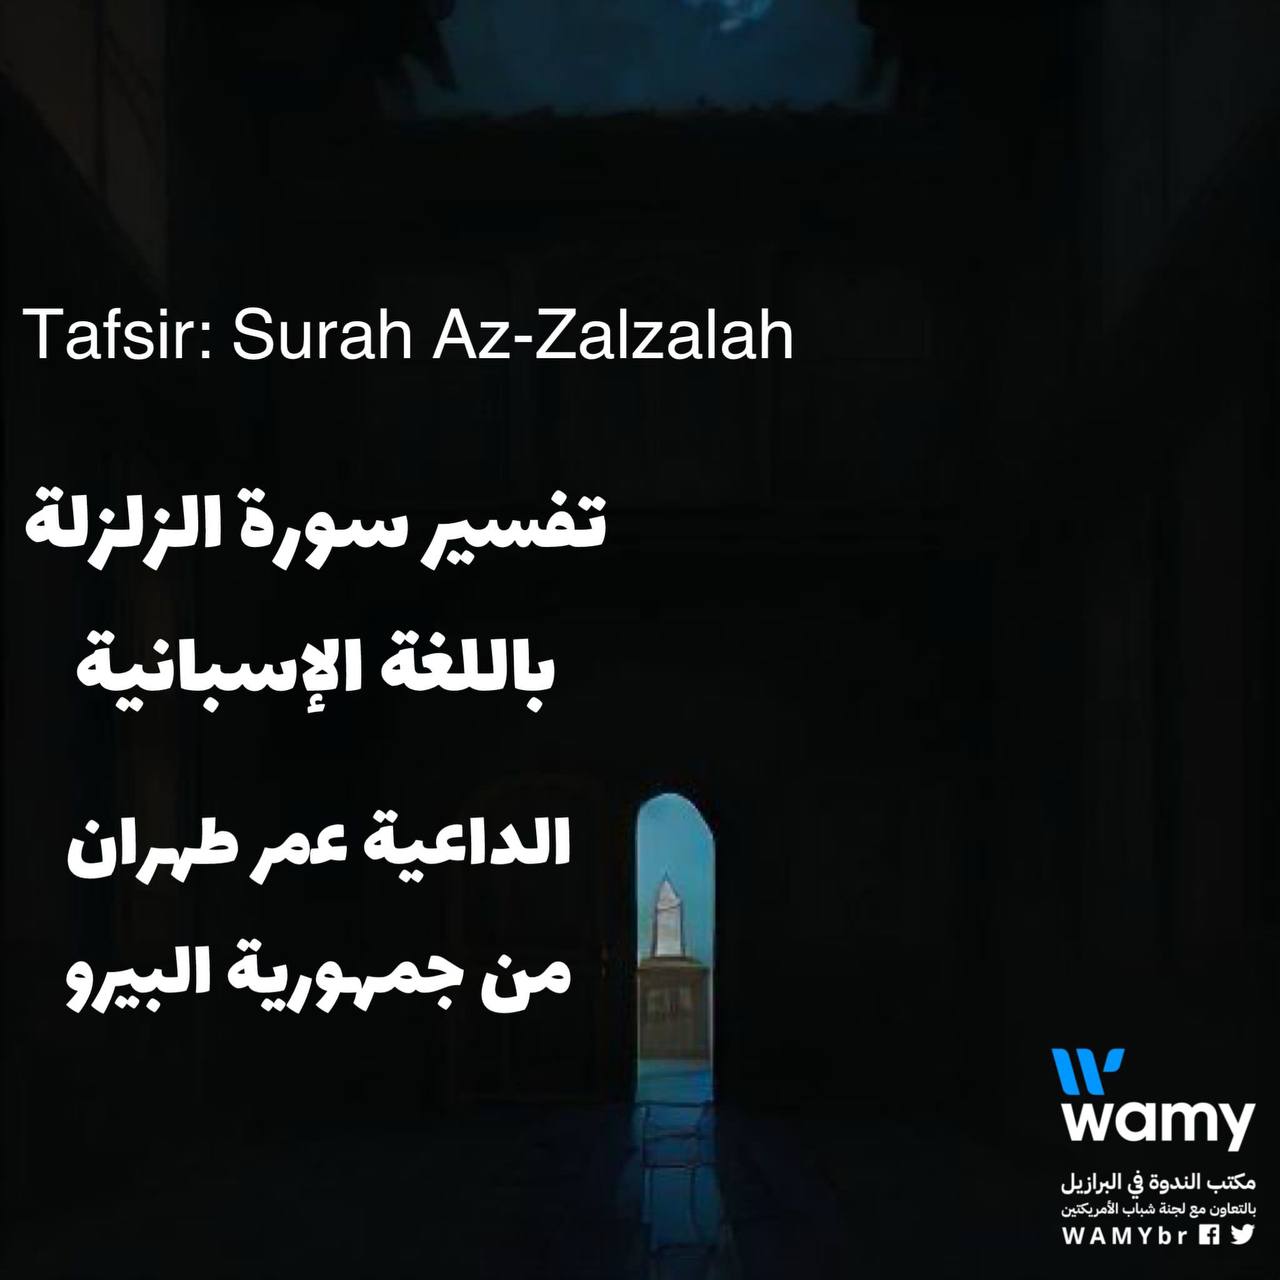 Tafsir: Surah Az-Zalzalah